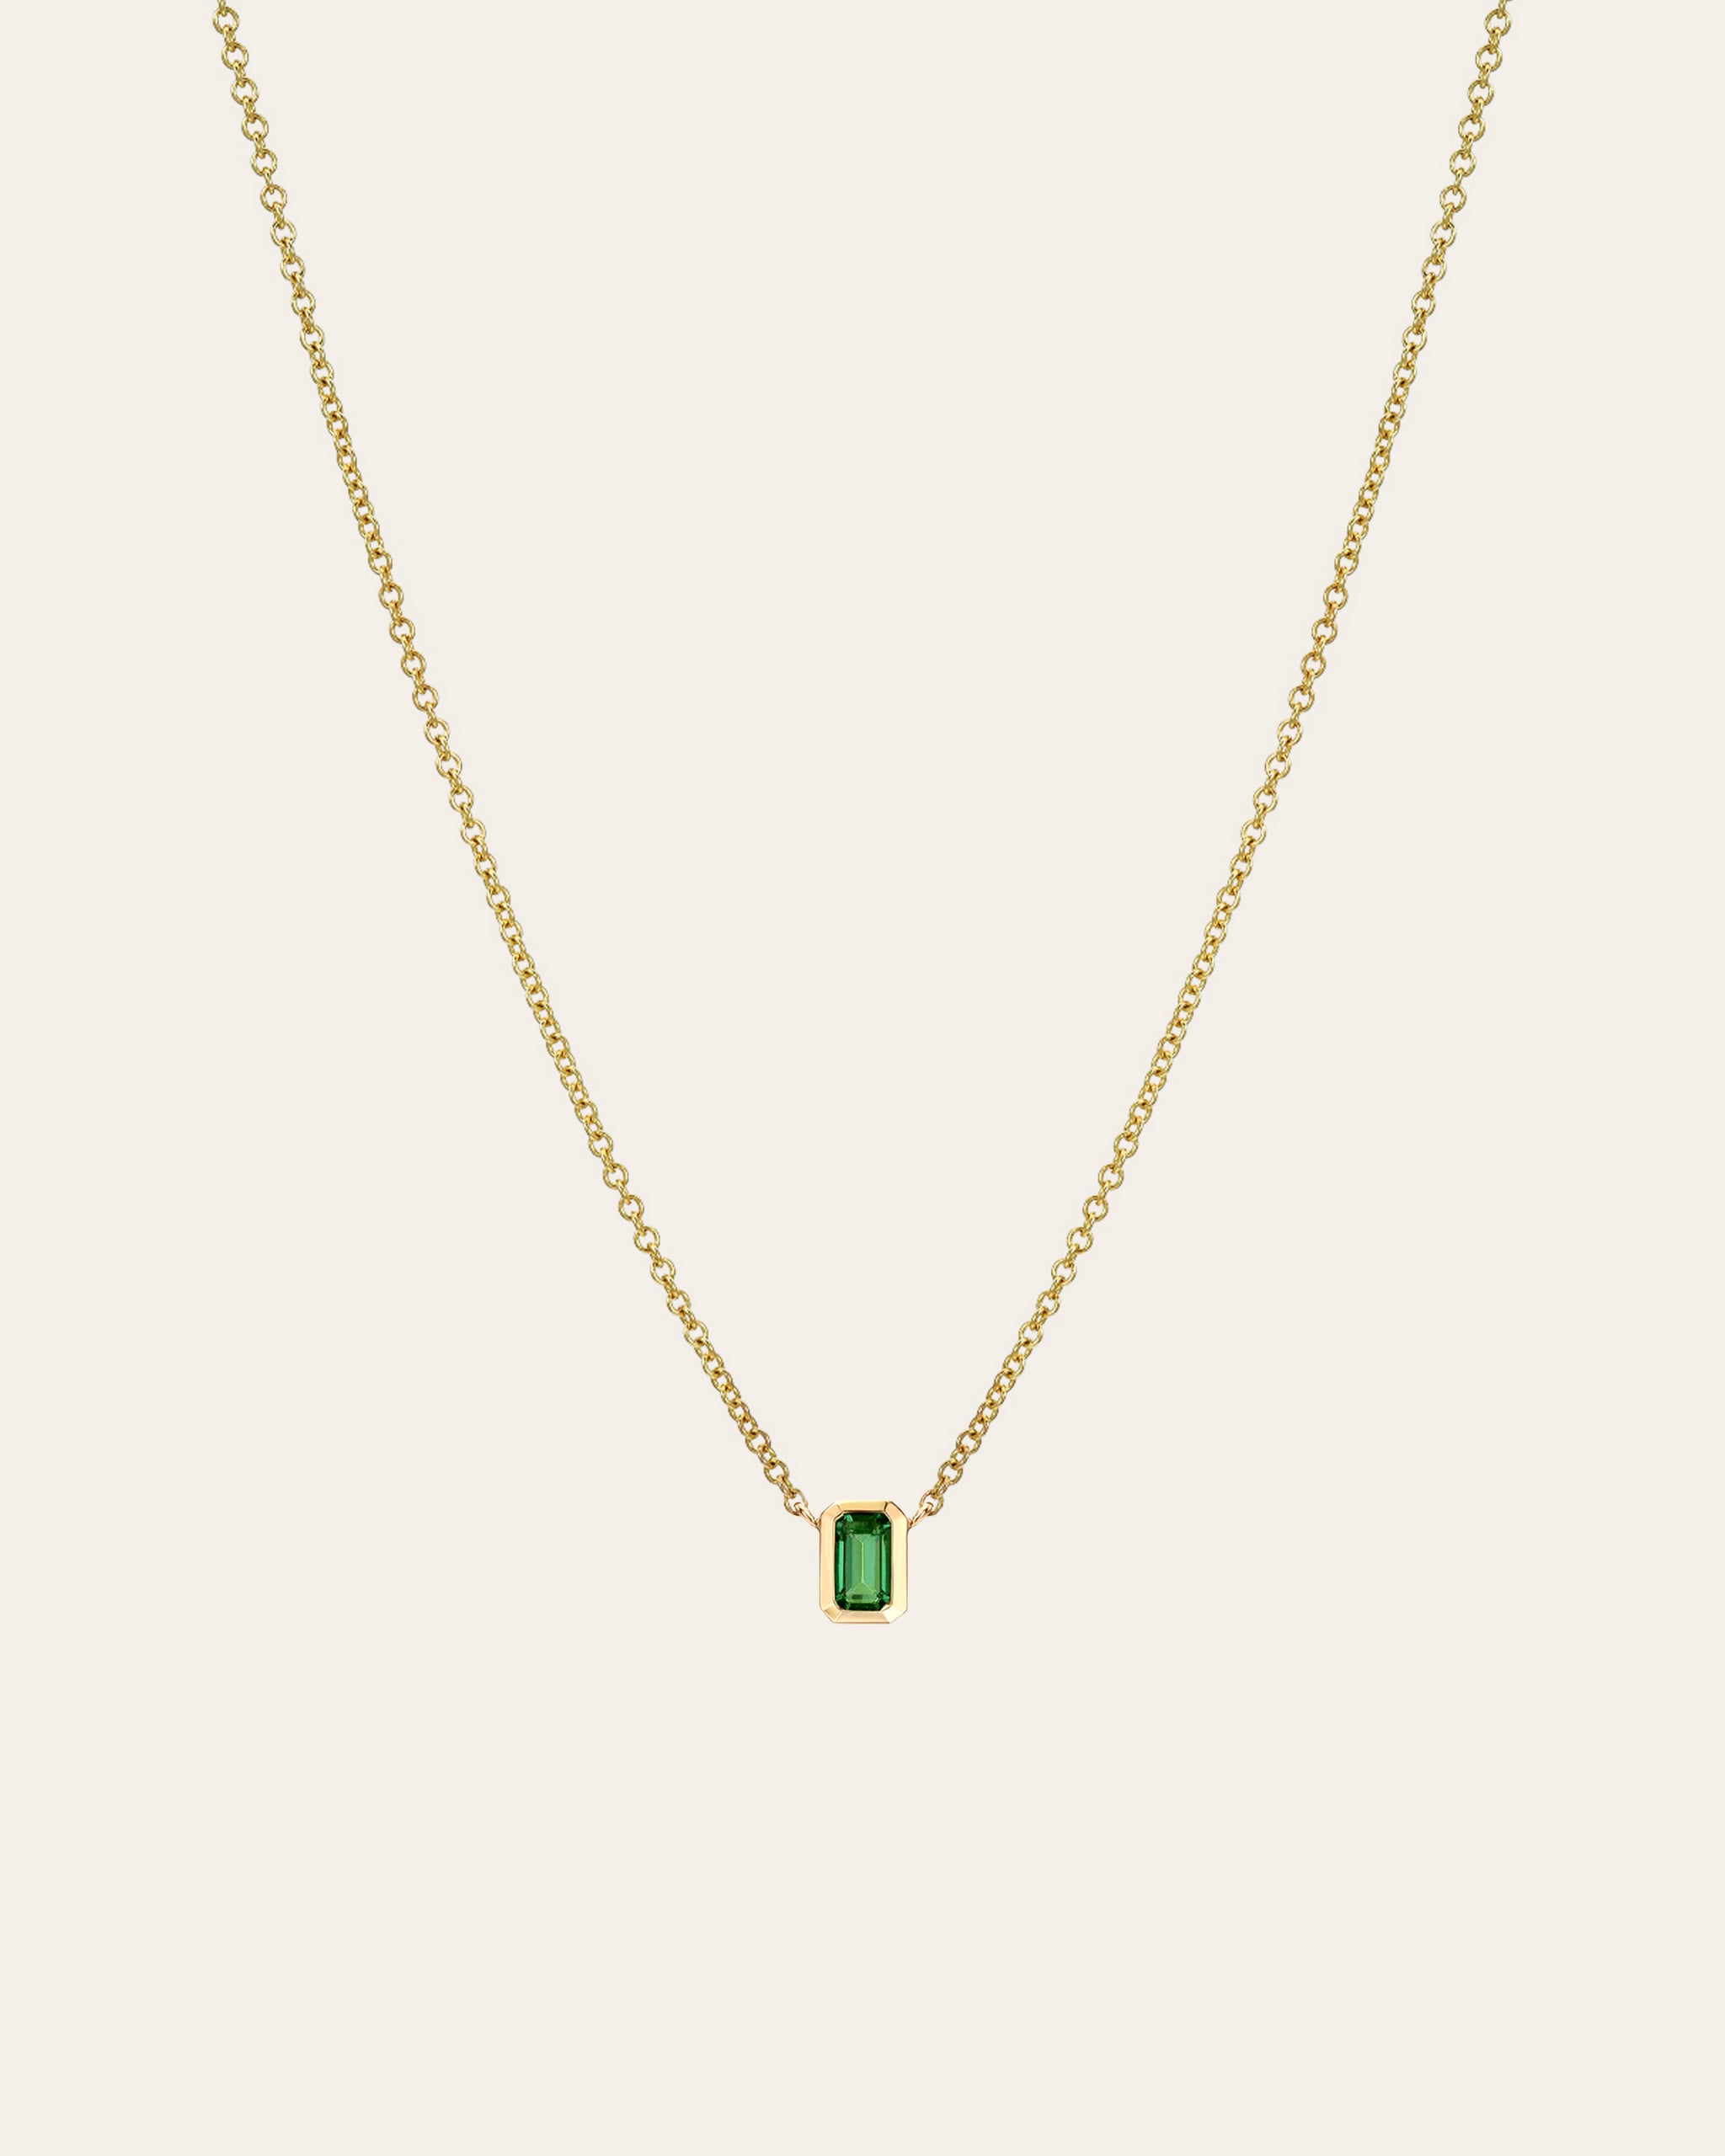 Emerald Cut Emerald Necklace - Zoe Lev Jewelry